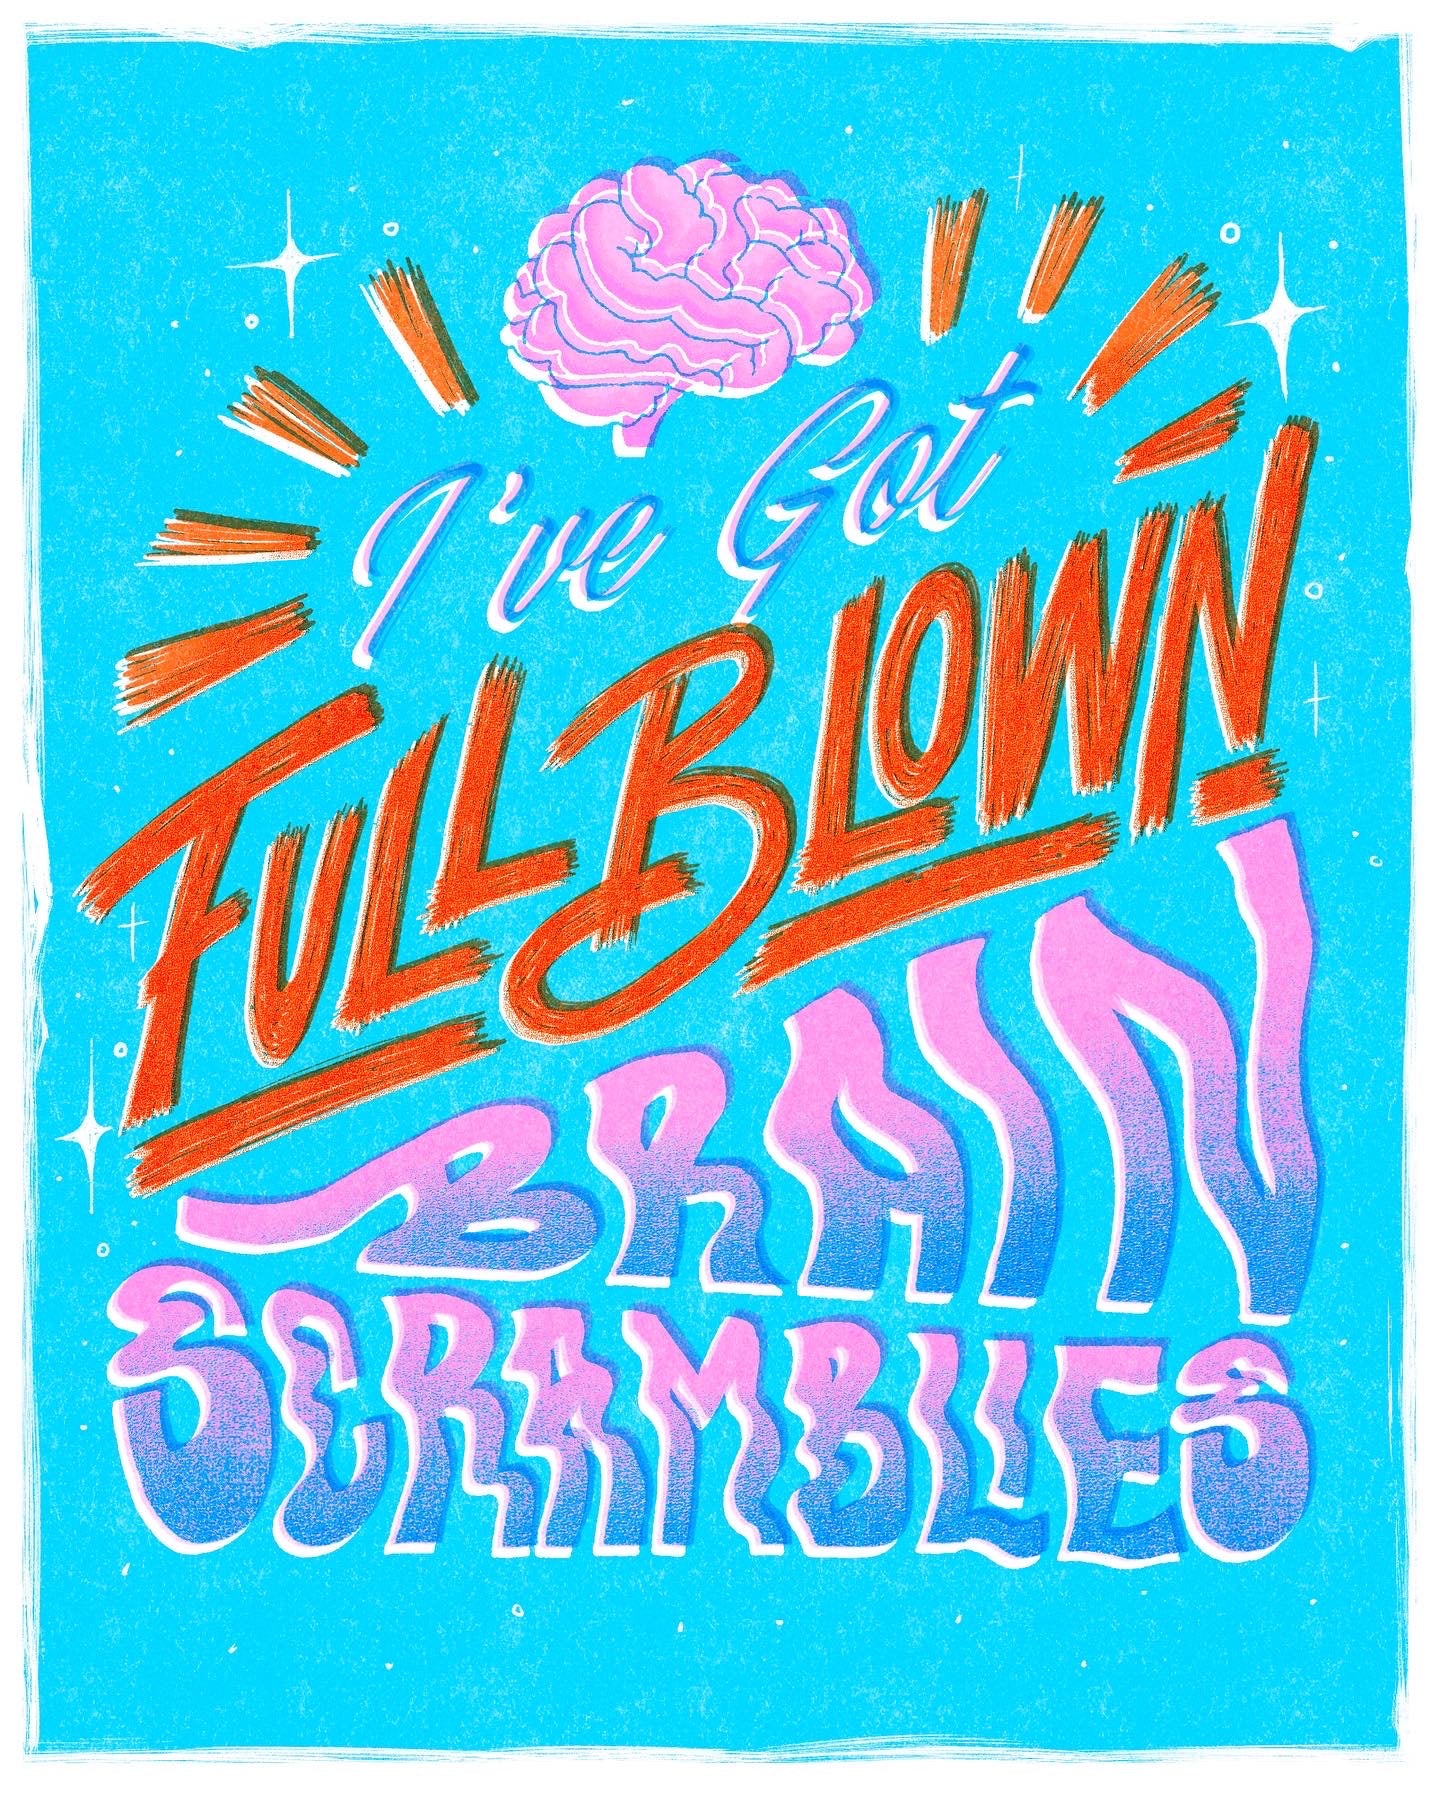 ‘I’ve got Full Blown Brain Scramblies’ Print